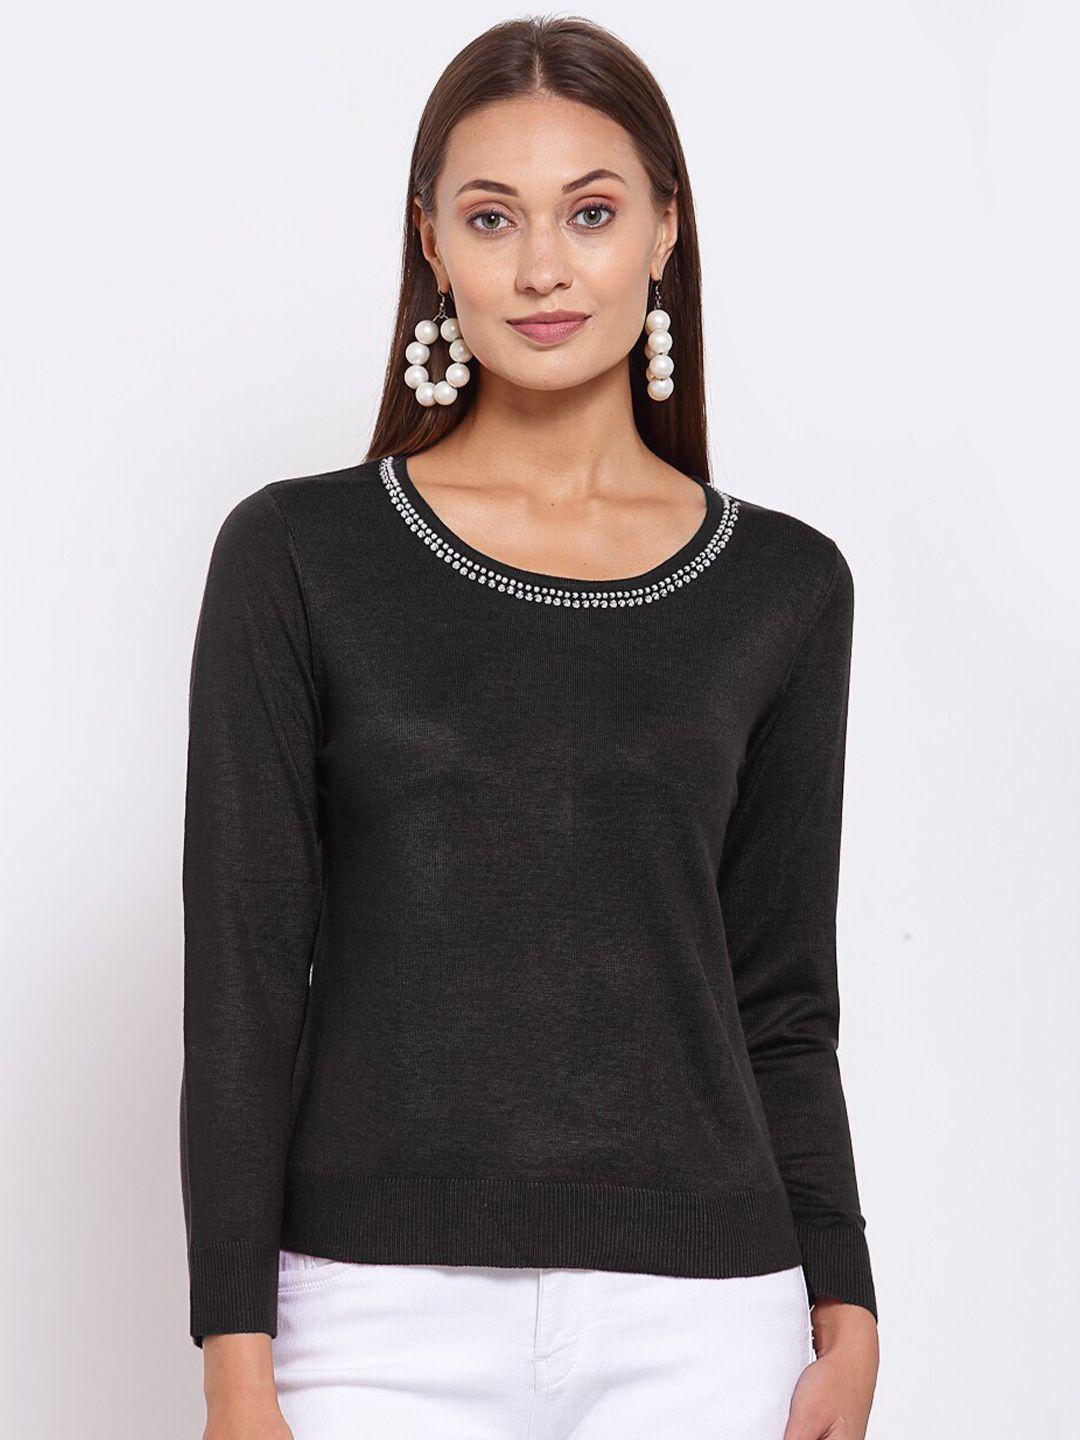 klotthe women black & white pullover with embellished detail